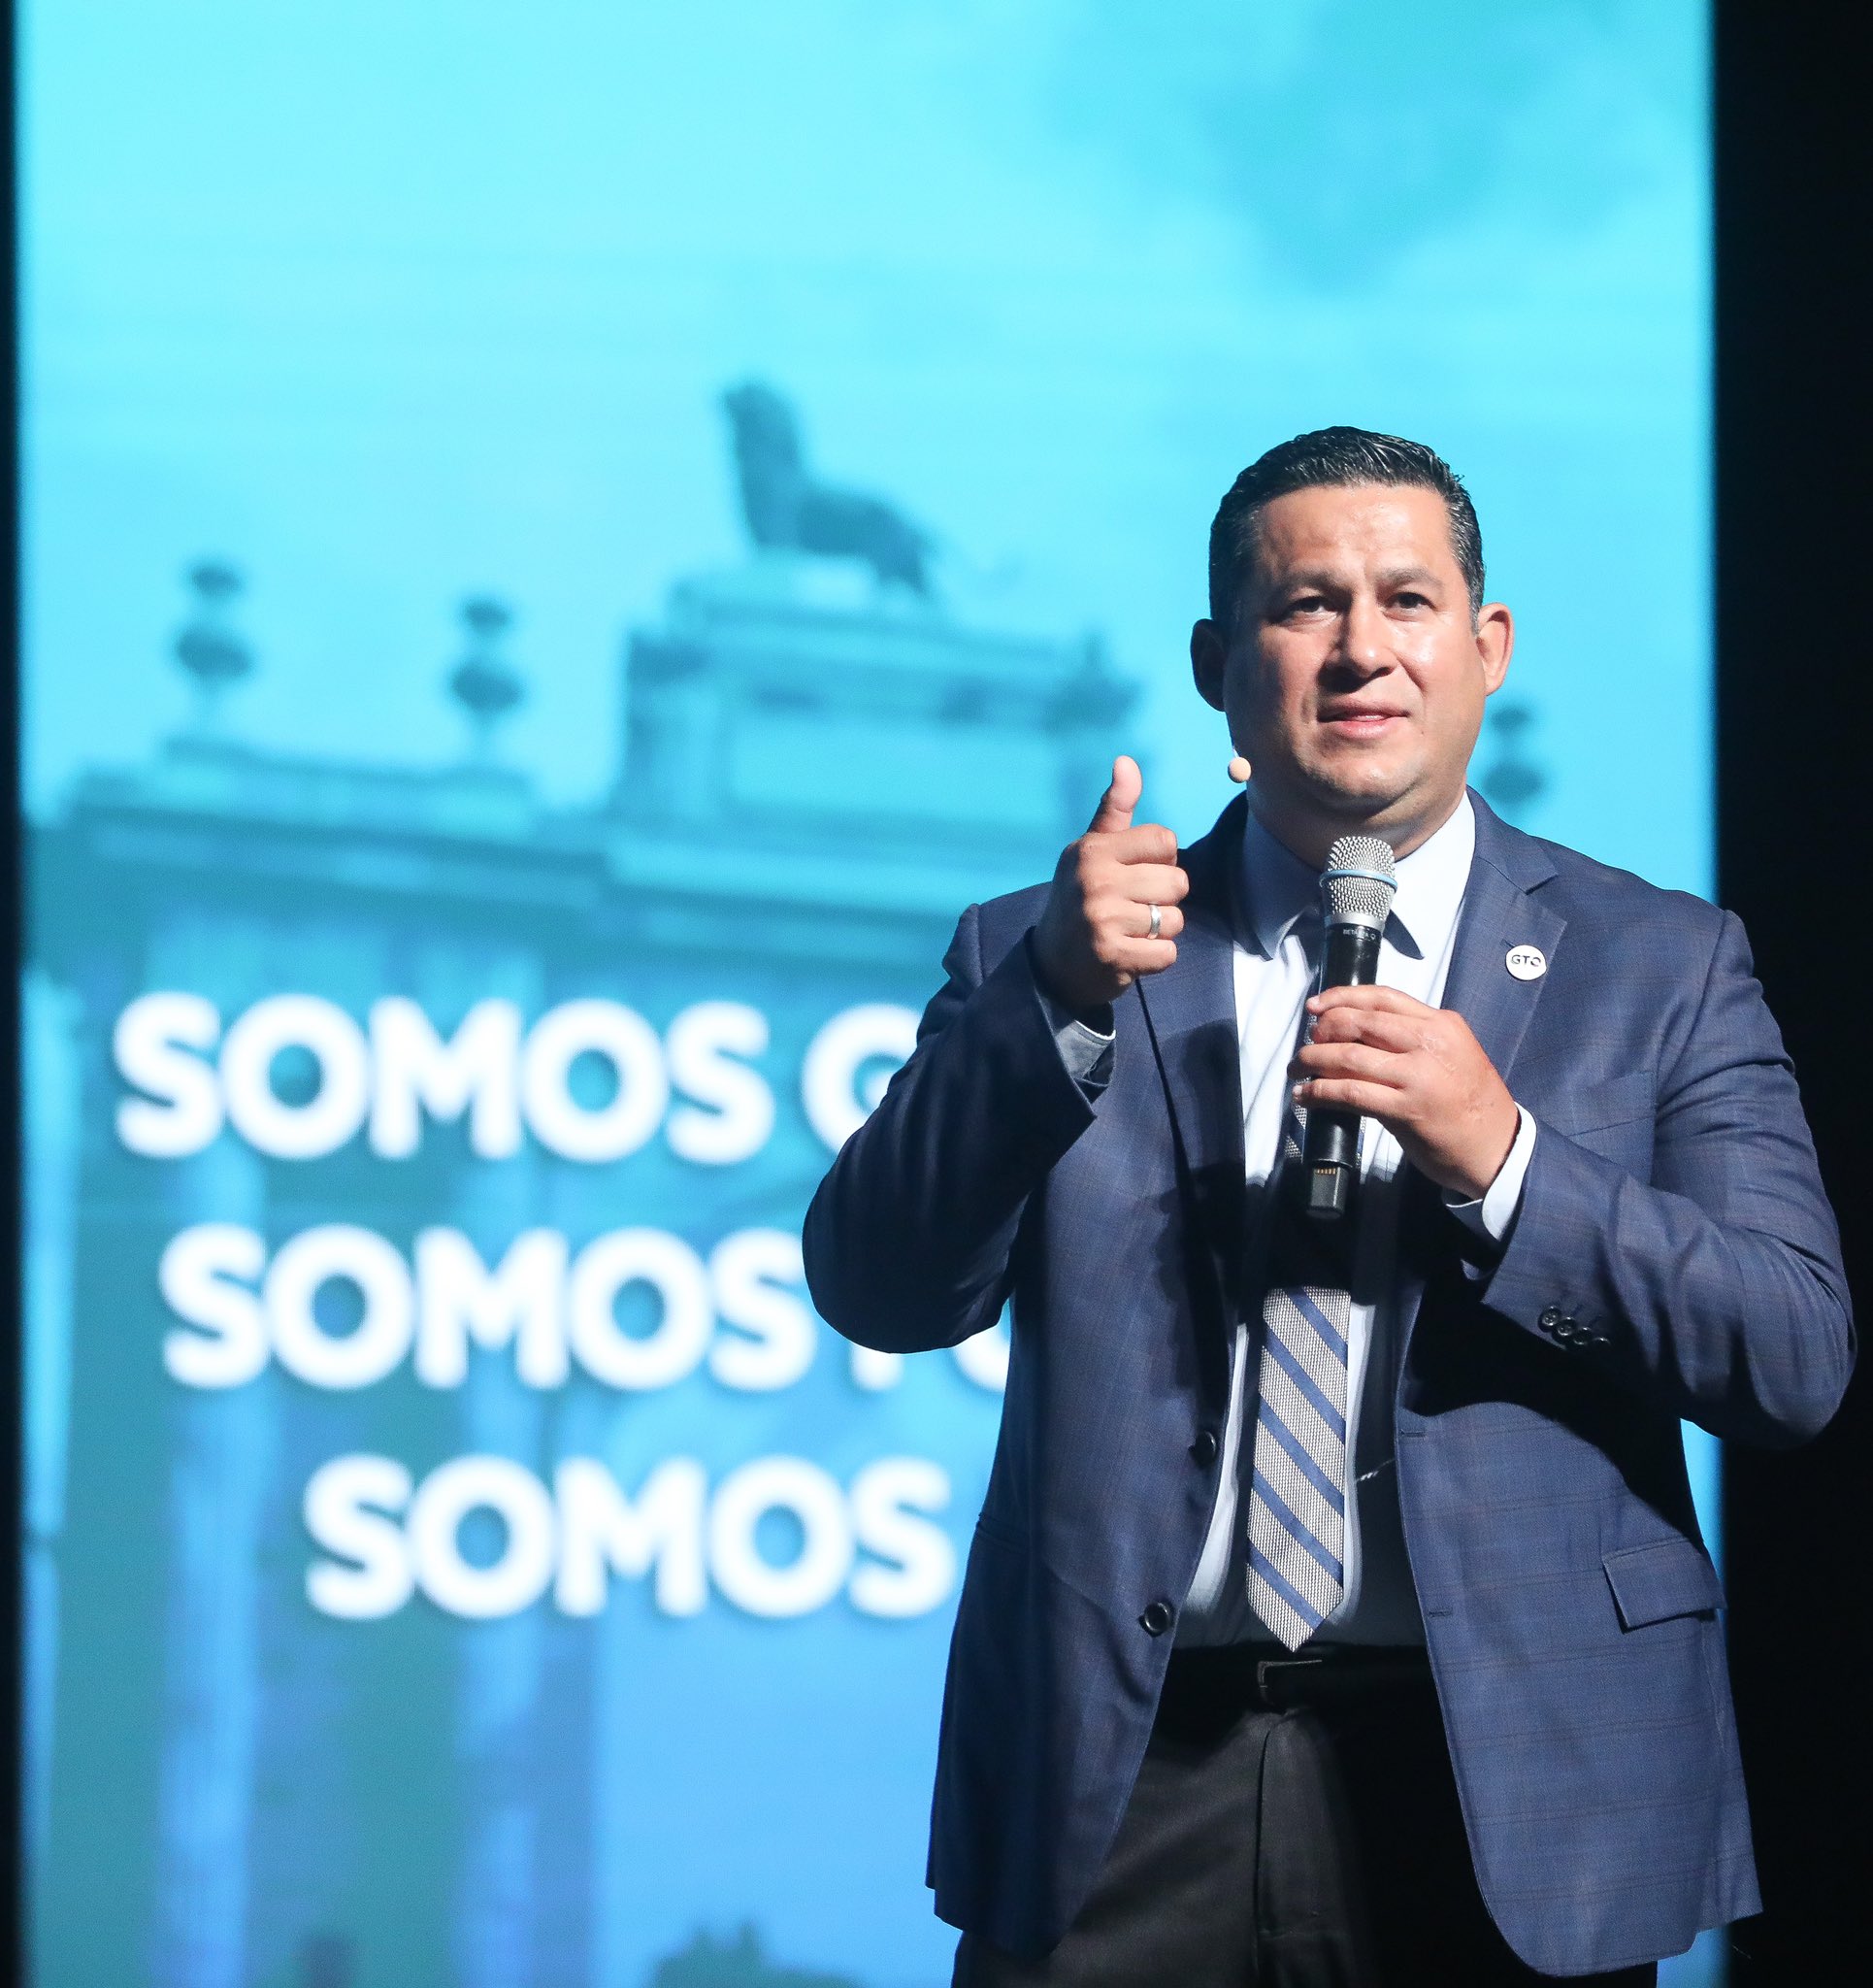 Diego Sinhue Rodríguez Vallejo, PAN governor of Guanajuato (Photo: Twitter/diegosinhue)